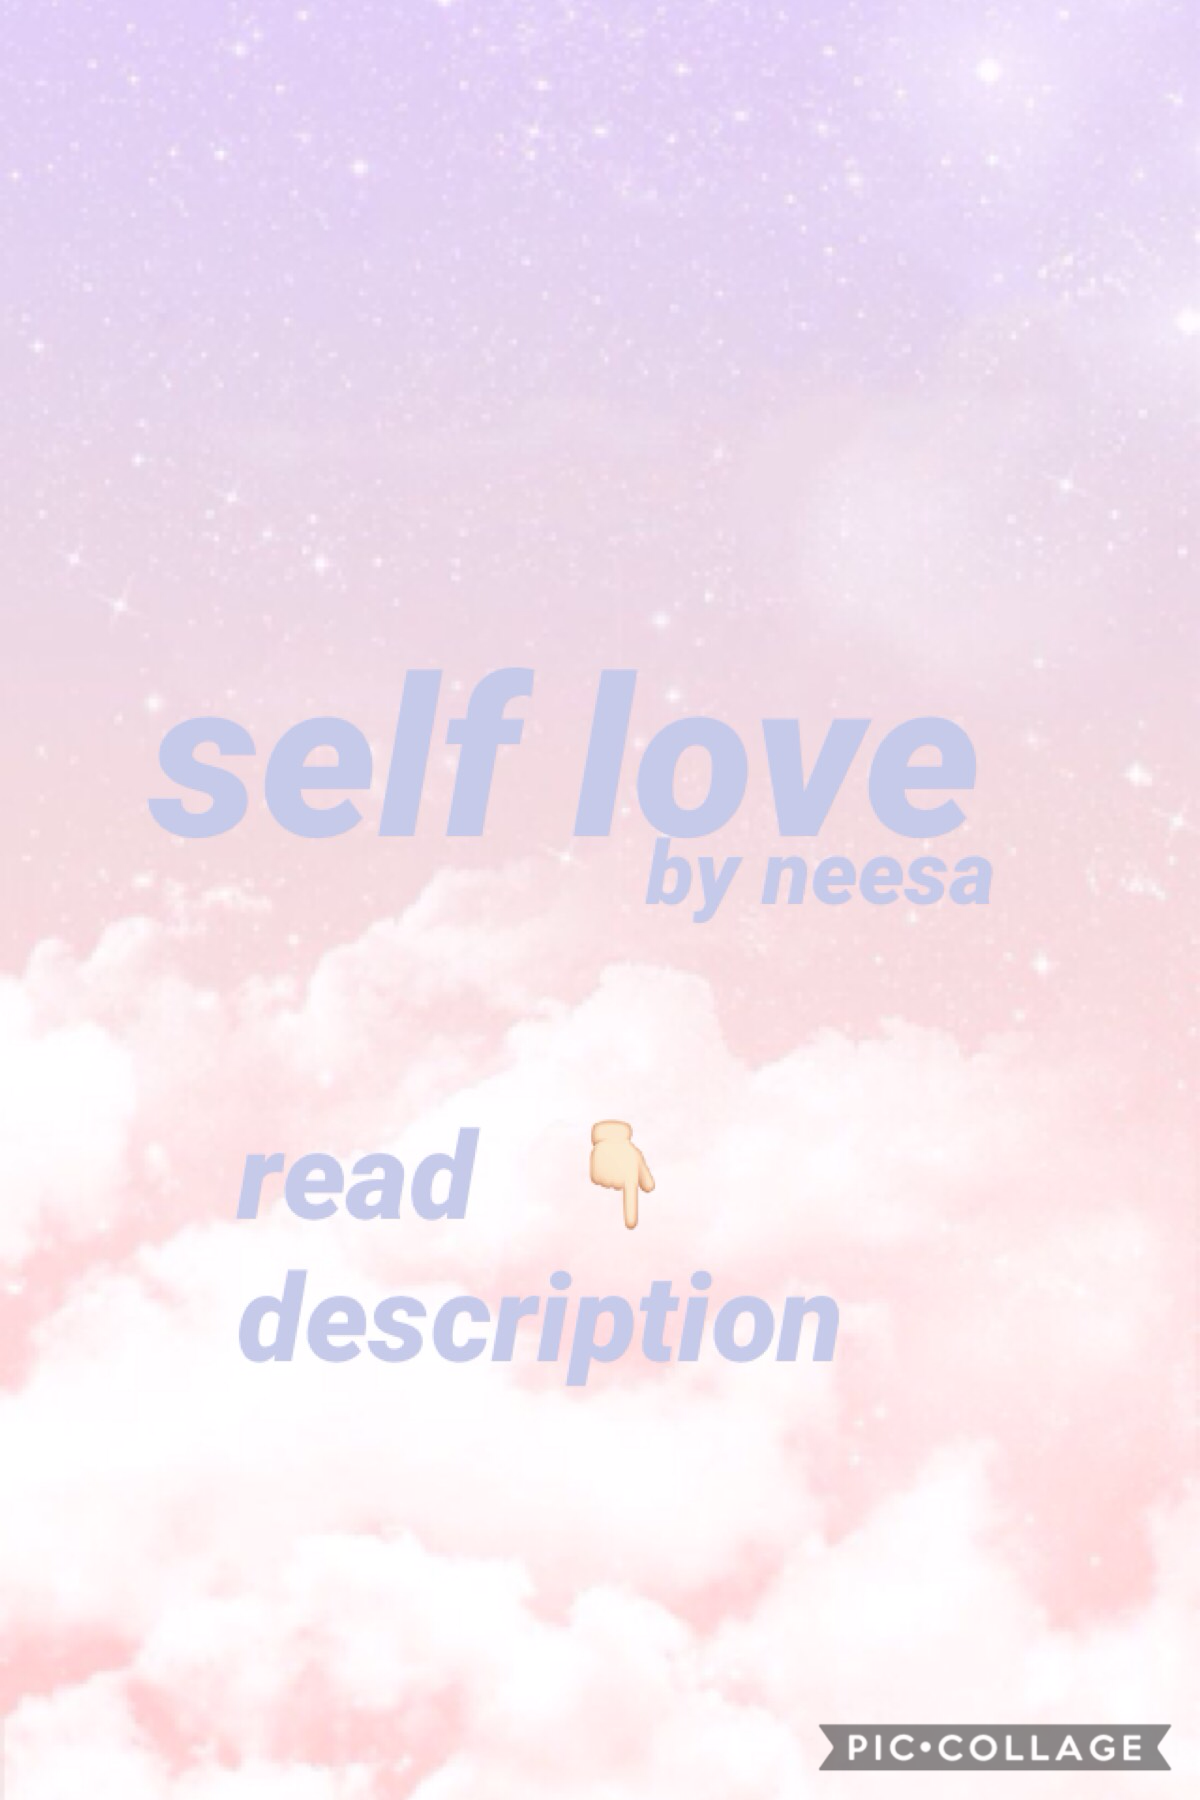 should I start a blog for self love?
-neesa 💜